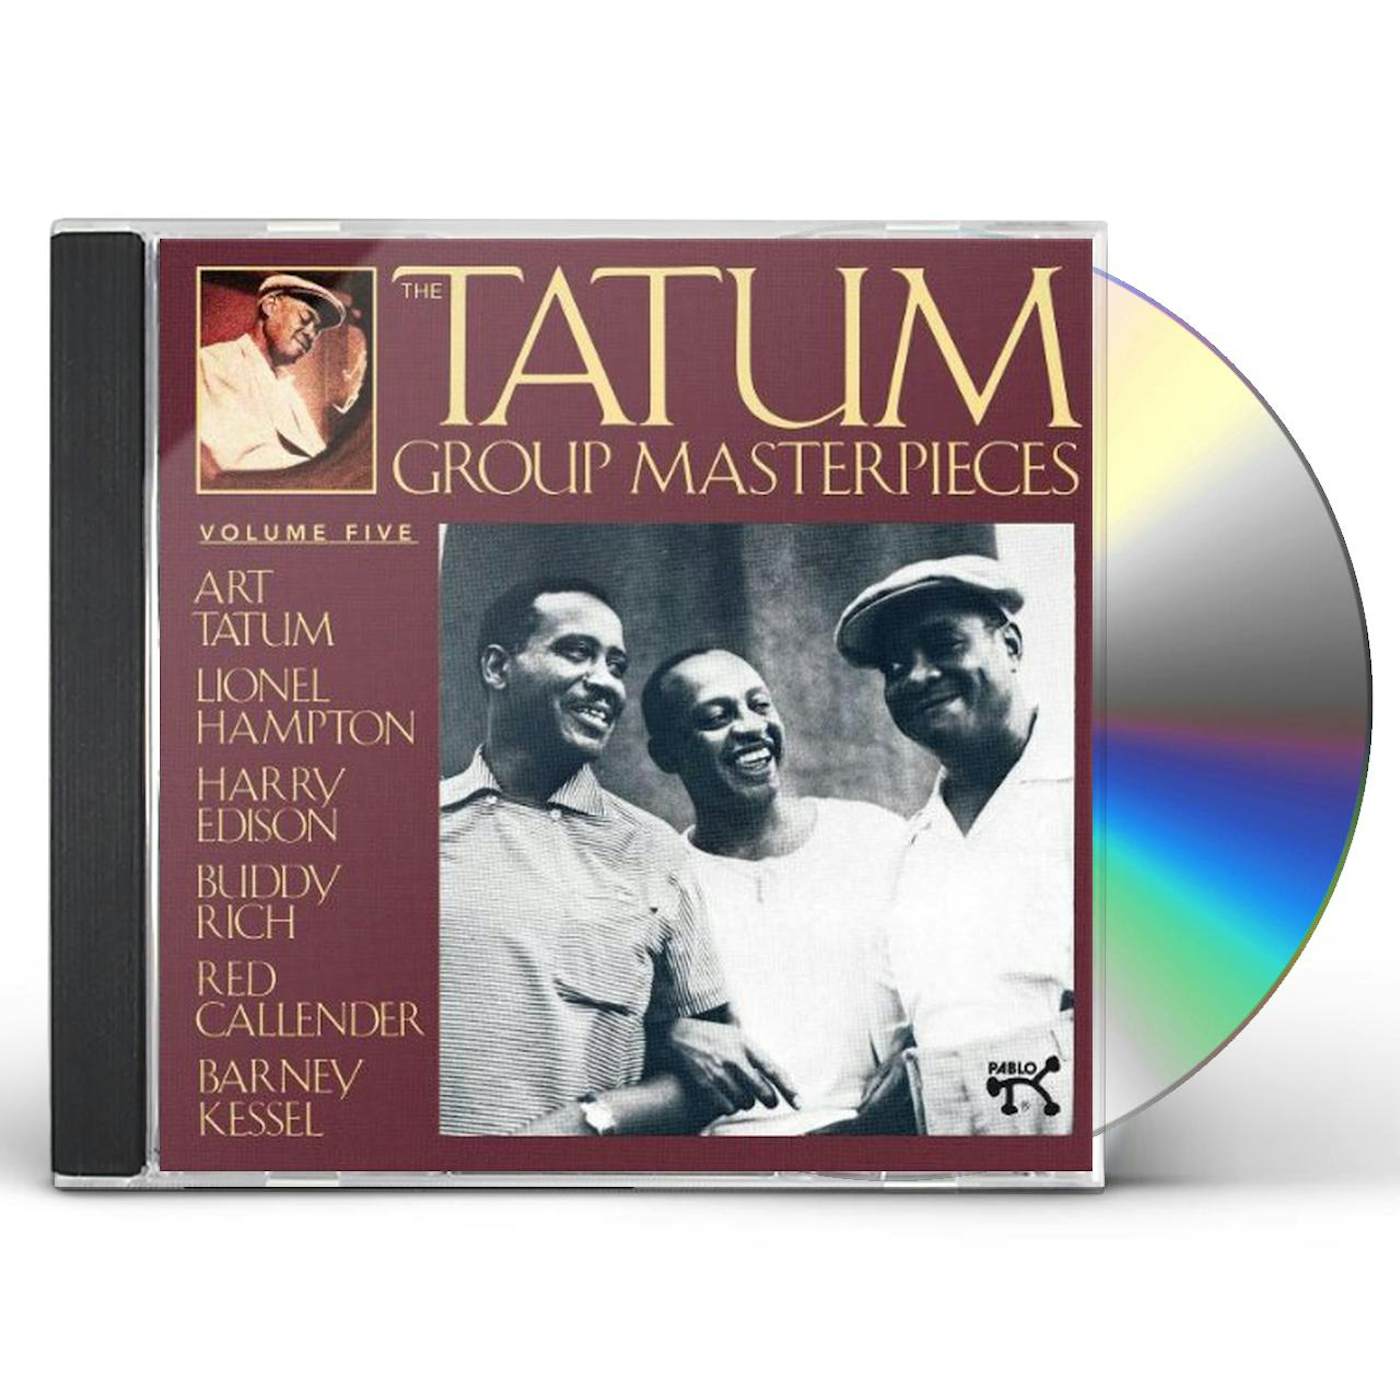 Art Tatum GROUP MASTERPIECES 5 CD